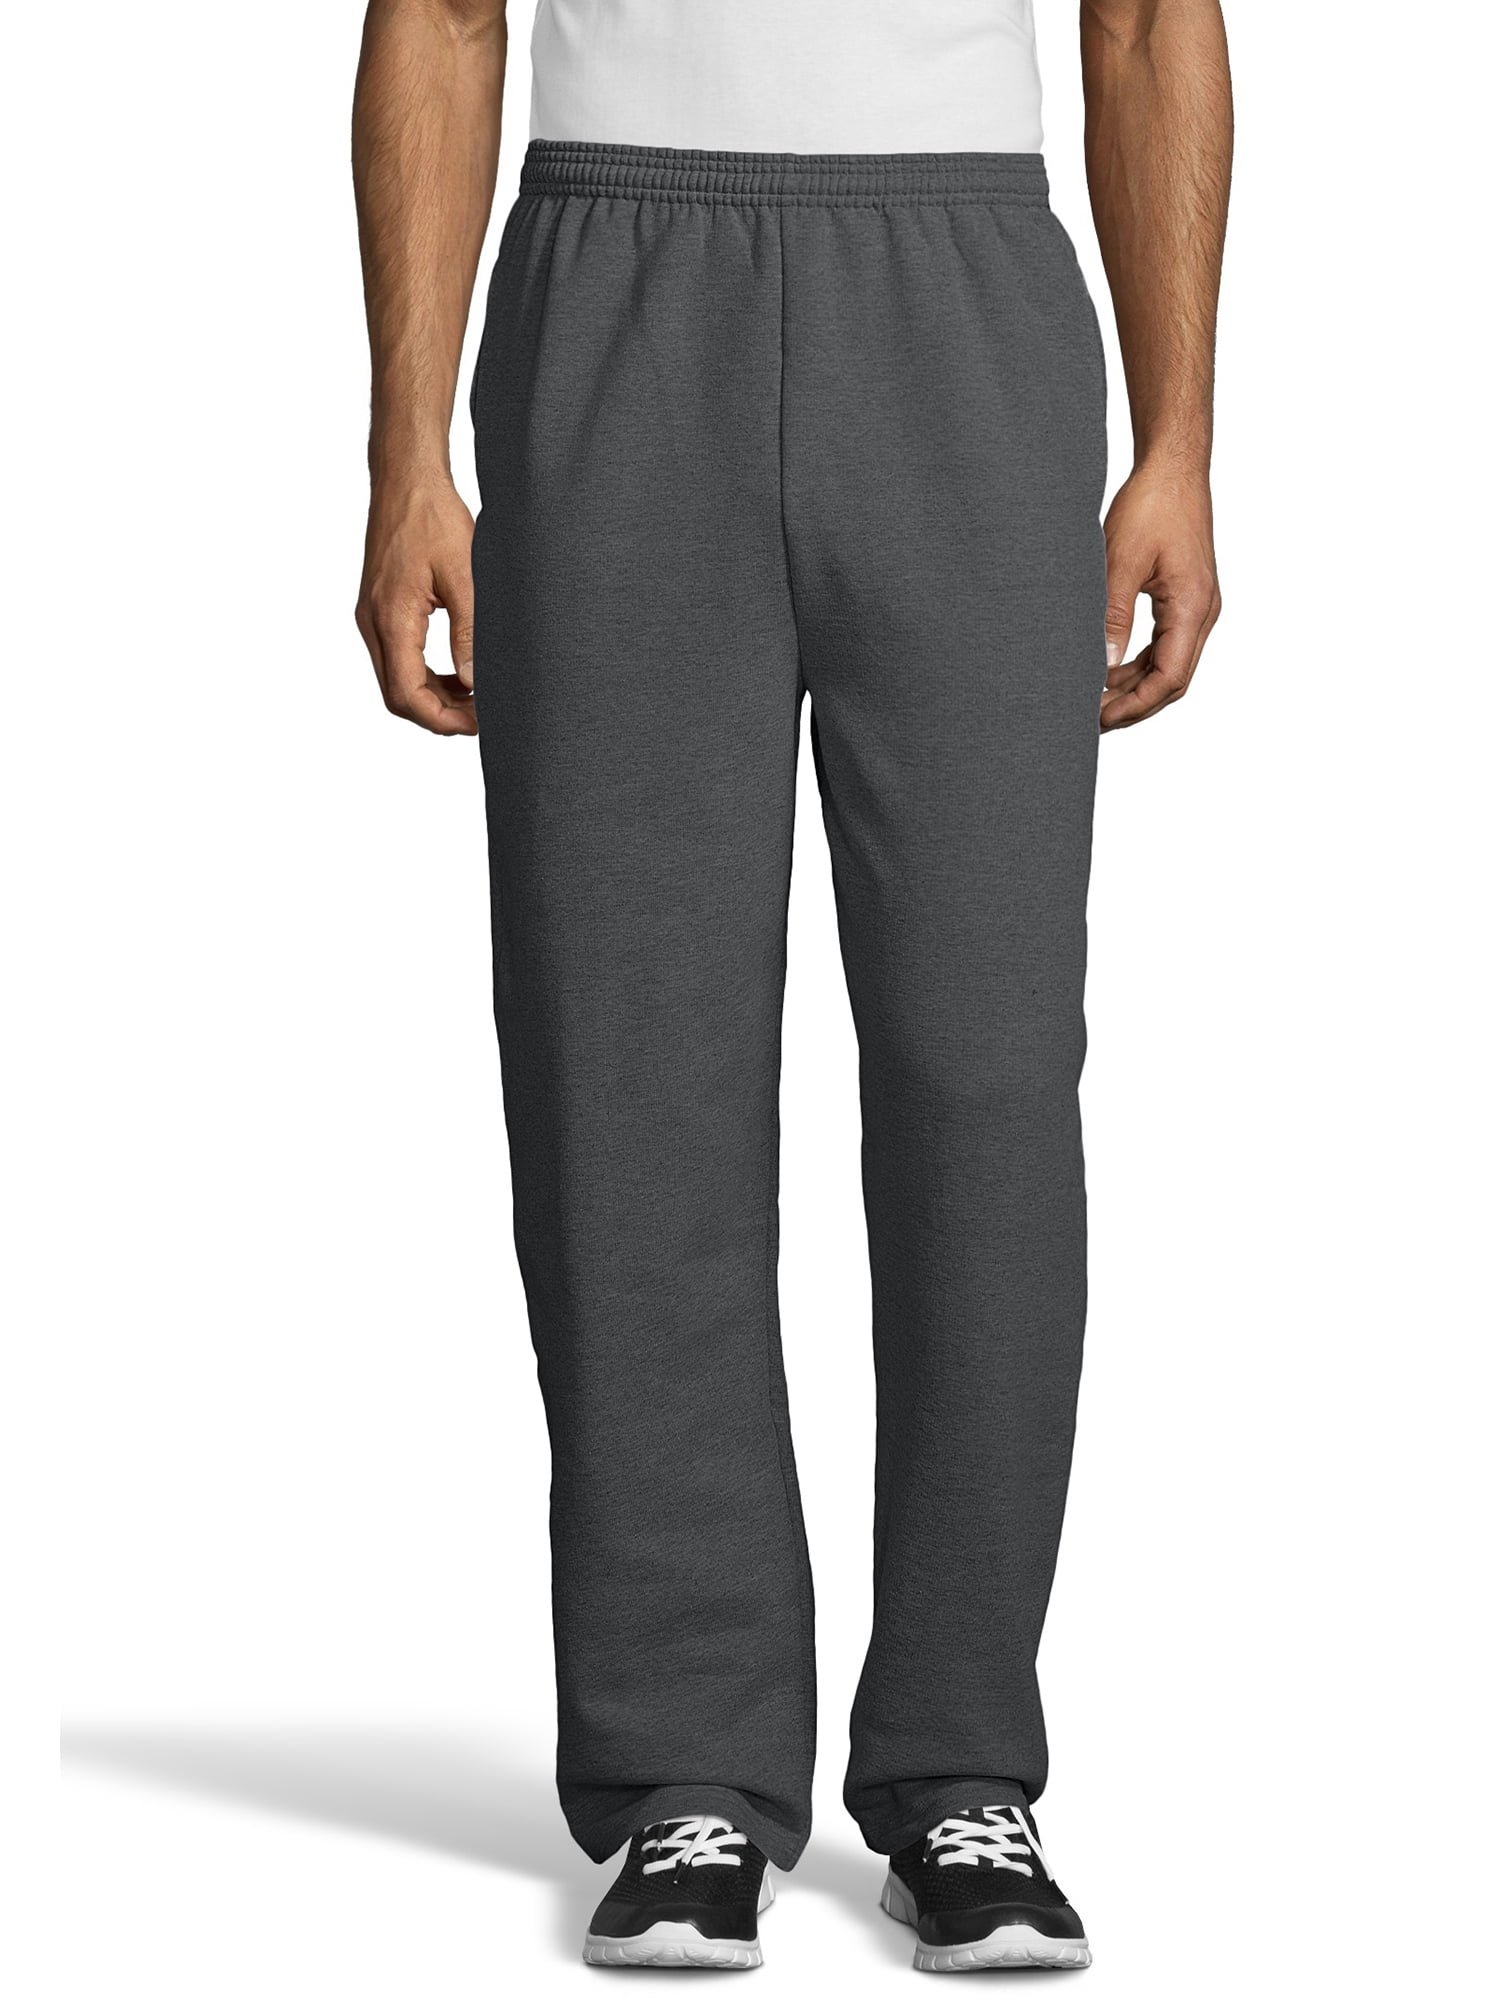 Hanes Men's EcoSmart Fleece Sweatpant with Pockets - Walmart.com